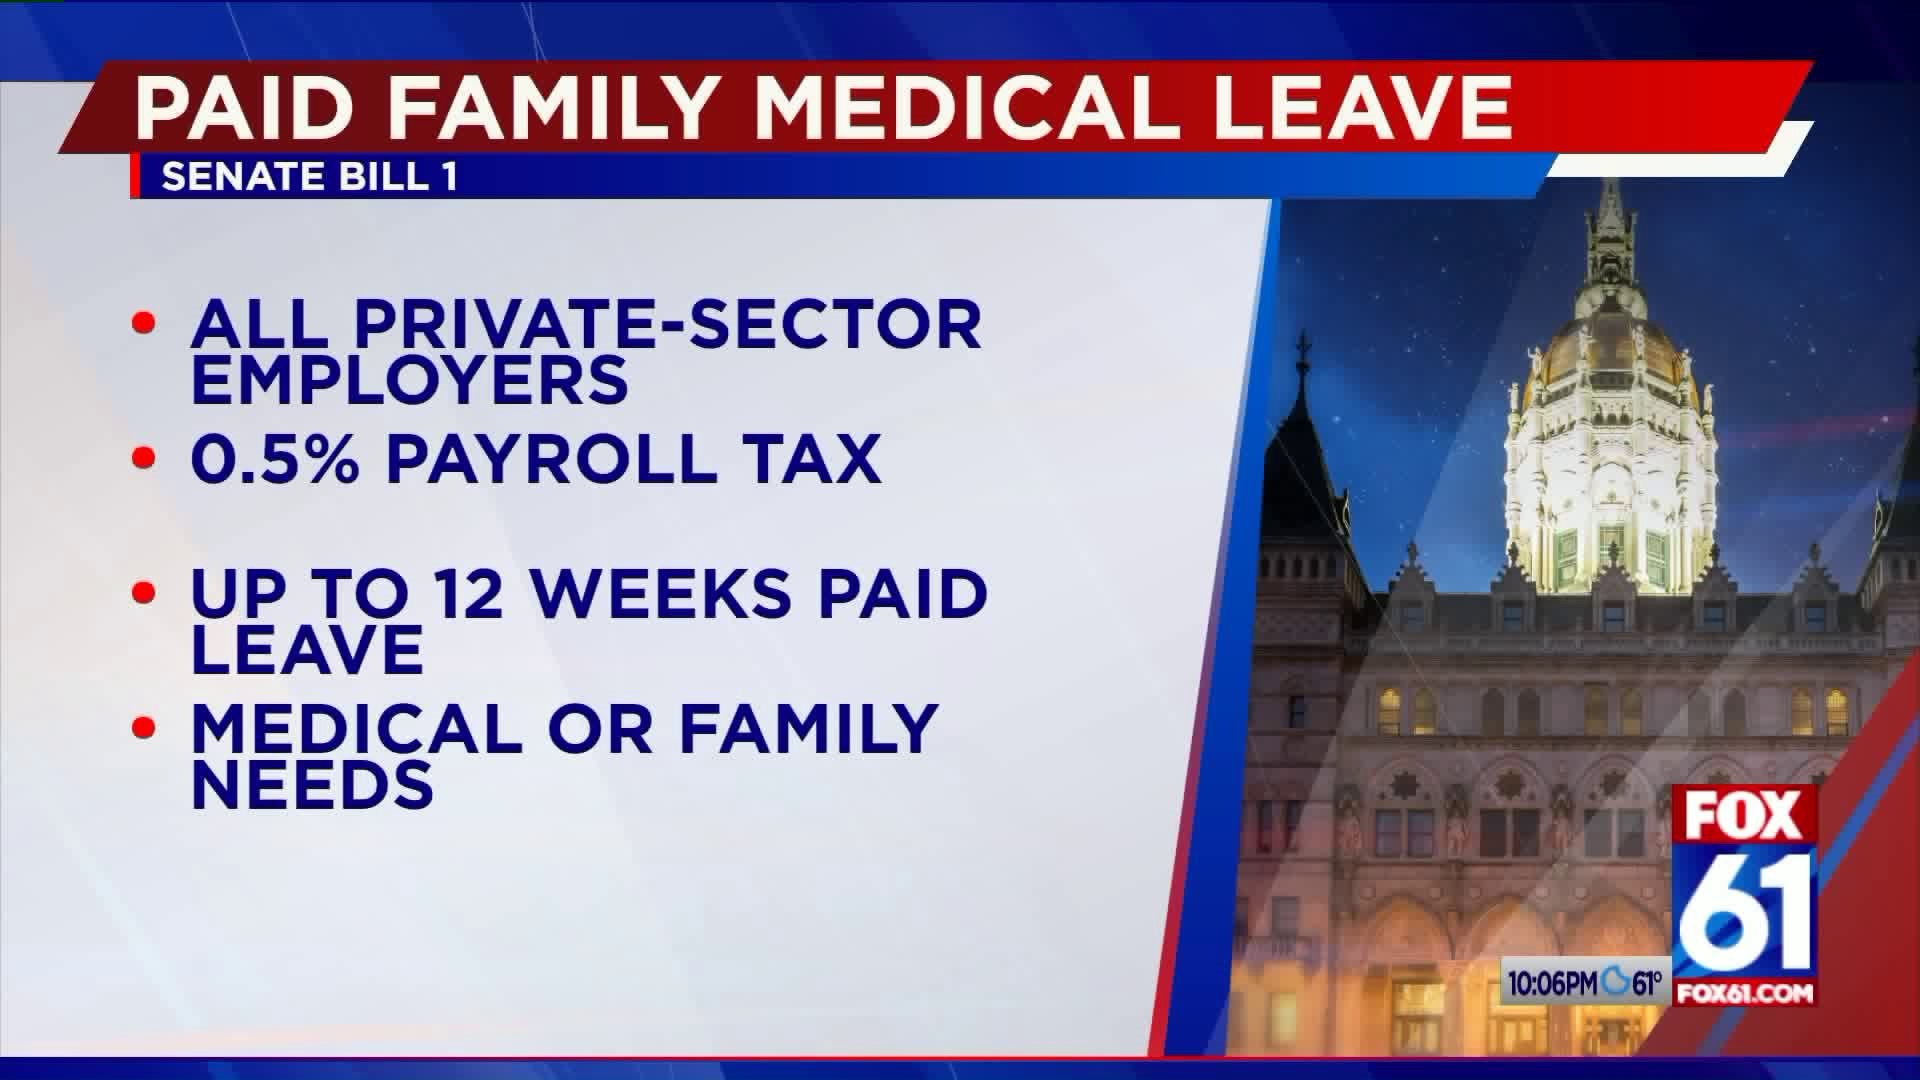 Paid Family Leave passes Senate